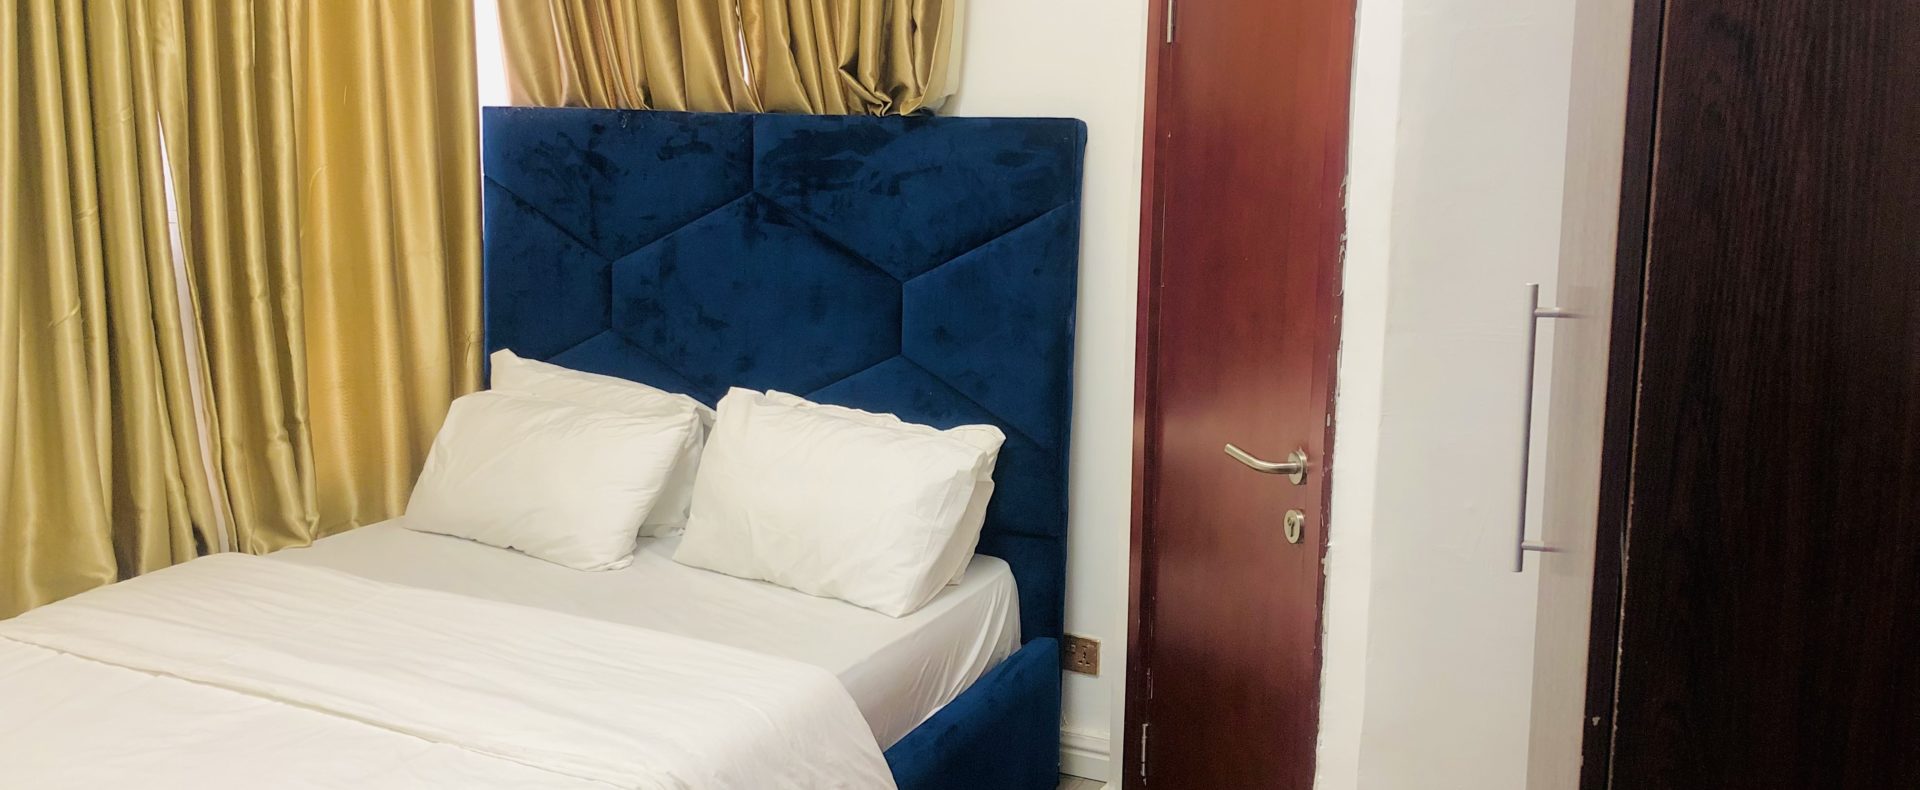 1 Bedroom Service Apartment Short Let In Lekki Phase 1 Lagos Nigeria